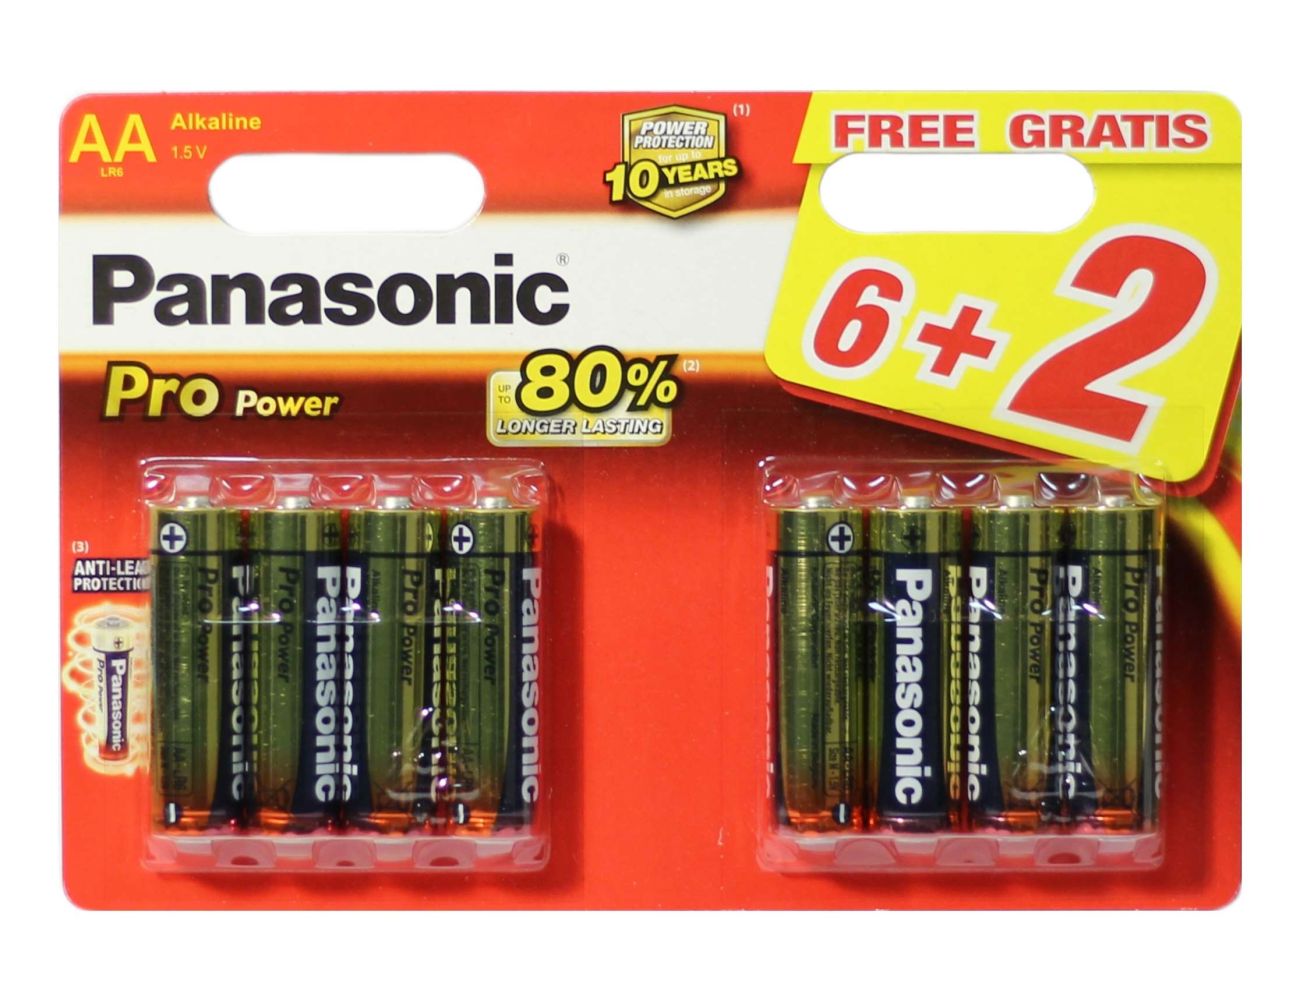 Батарейка АА Panasonic Pro Power Alkaline 1.5V LR6XEG/8B2F 6+2 бесплатно